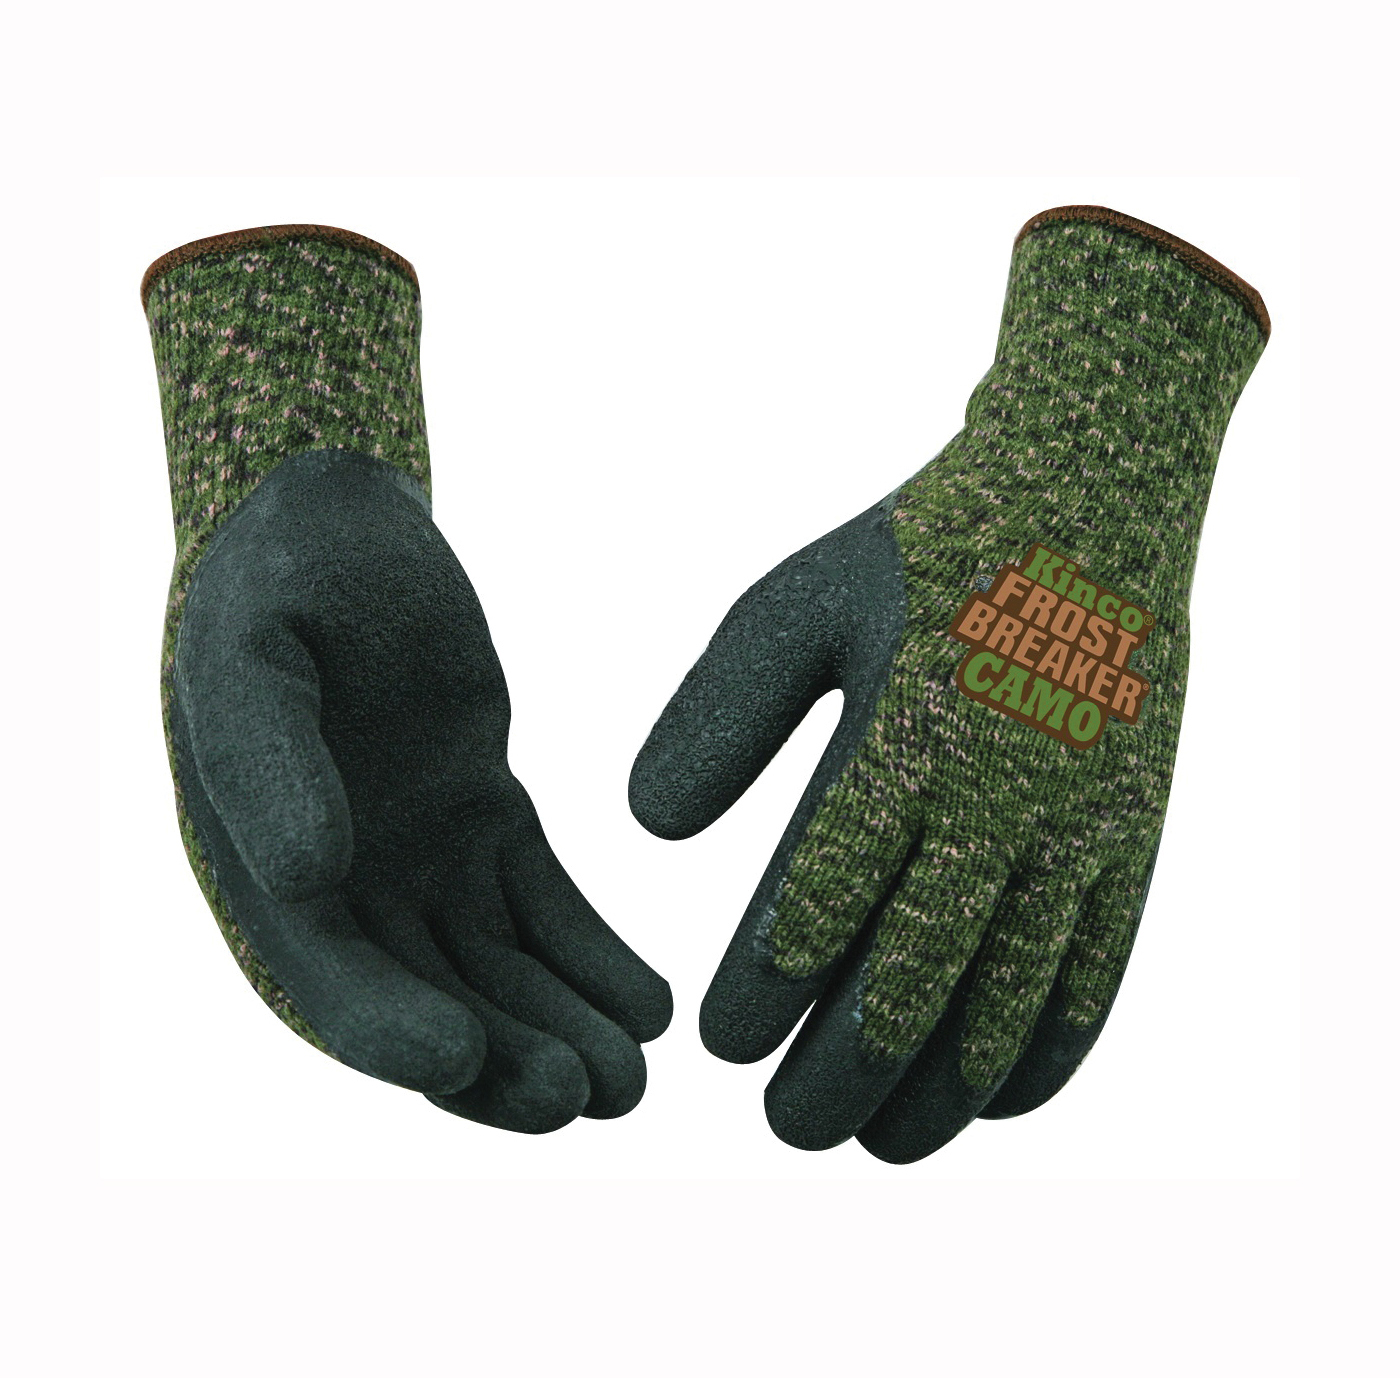 1788-XL High-Dexterity Protective Gloves, Men's, XL, Regular Thumb, Knit Wrist Cuff, Acrylic